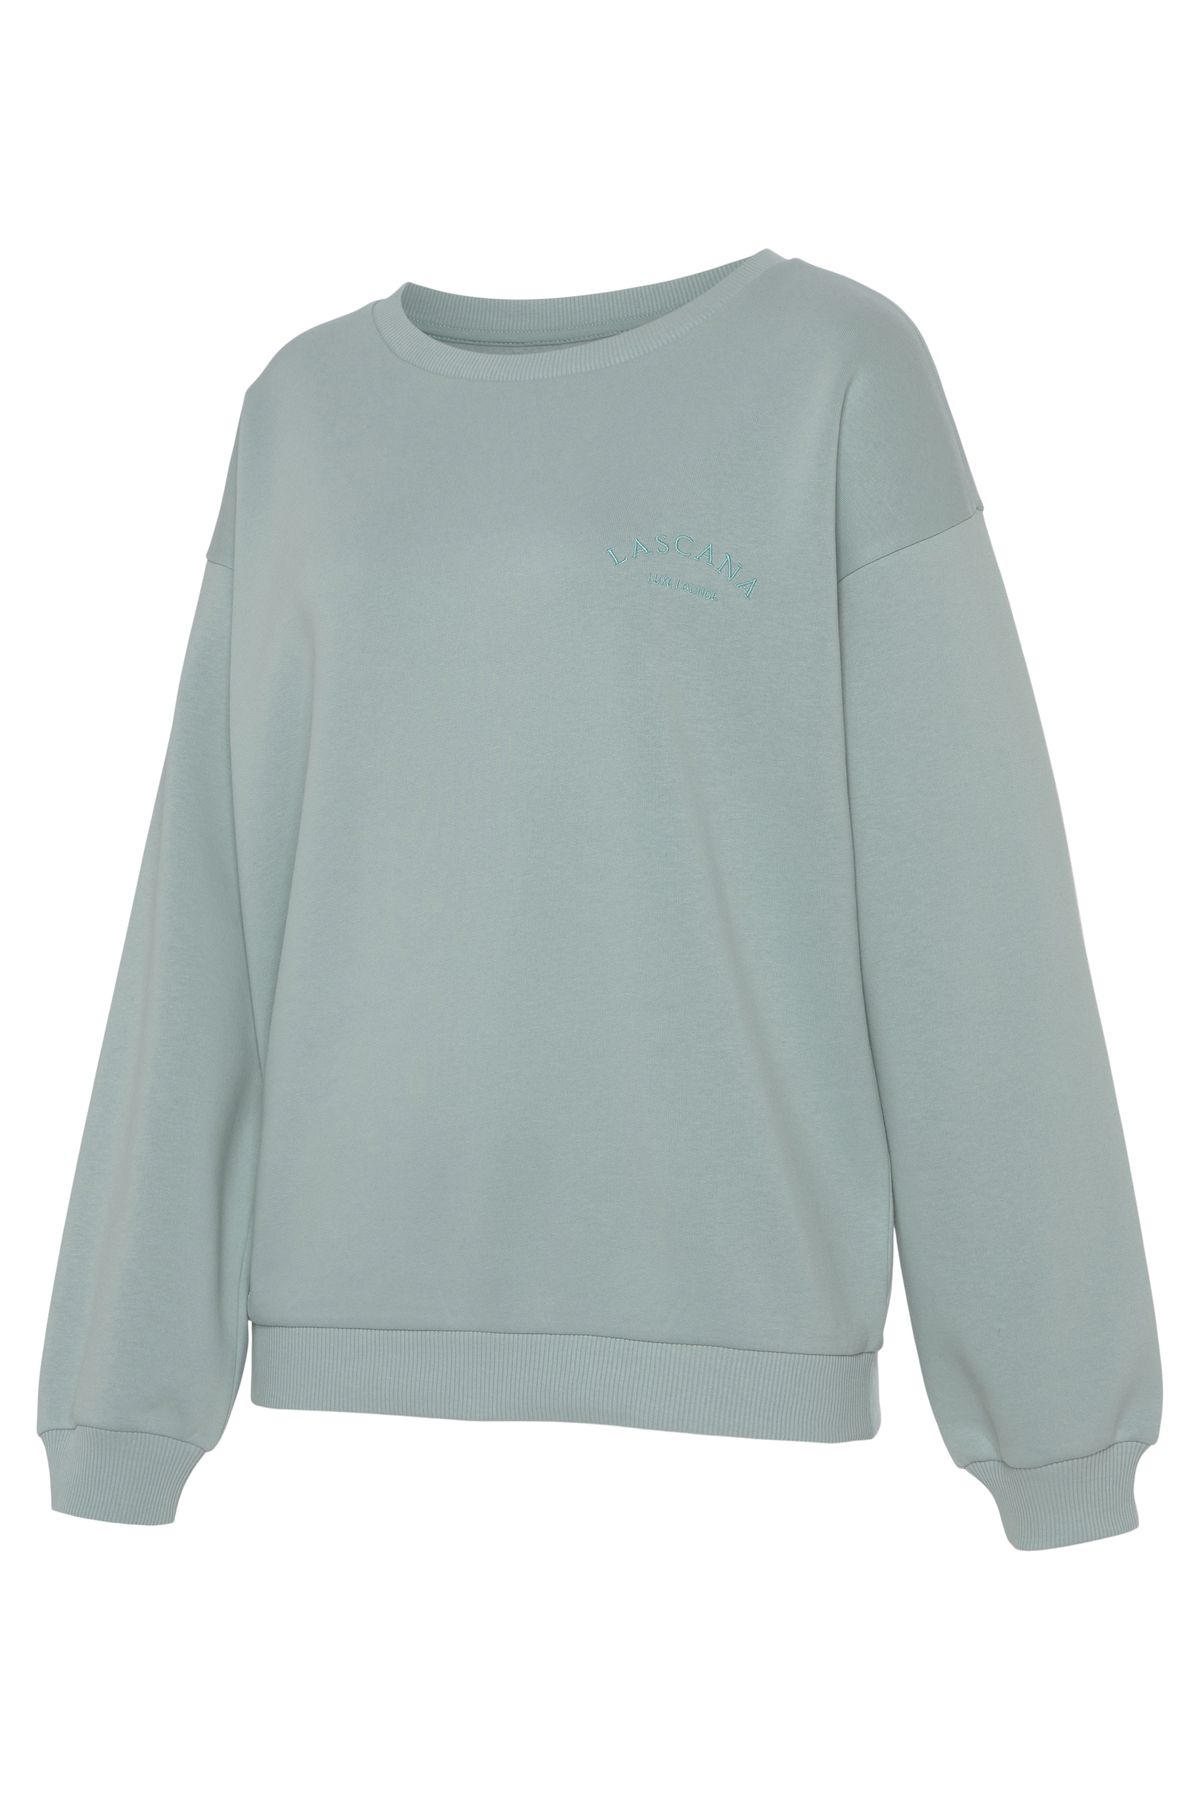 LASCANA - Trendyol - Regular Sweatshirt Grün - Fit